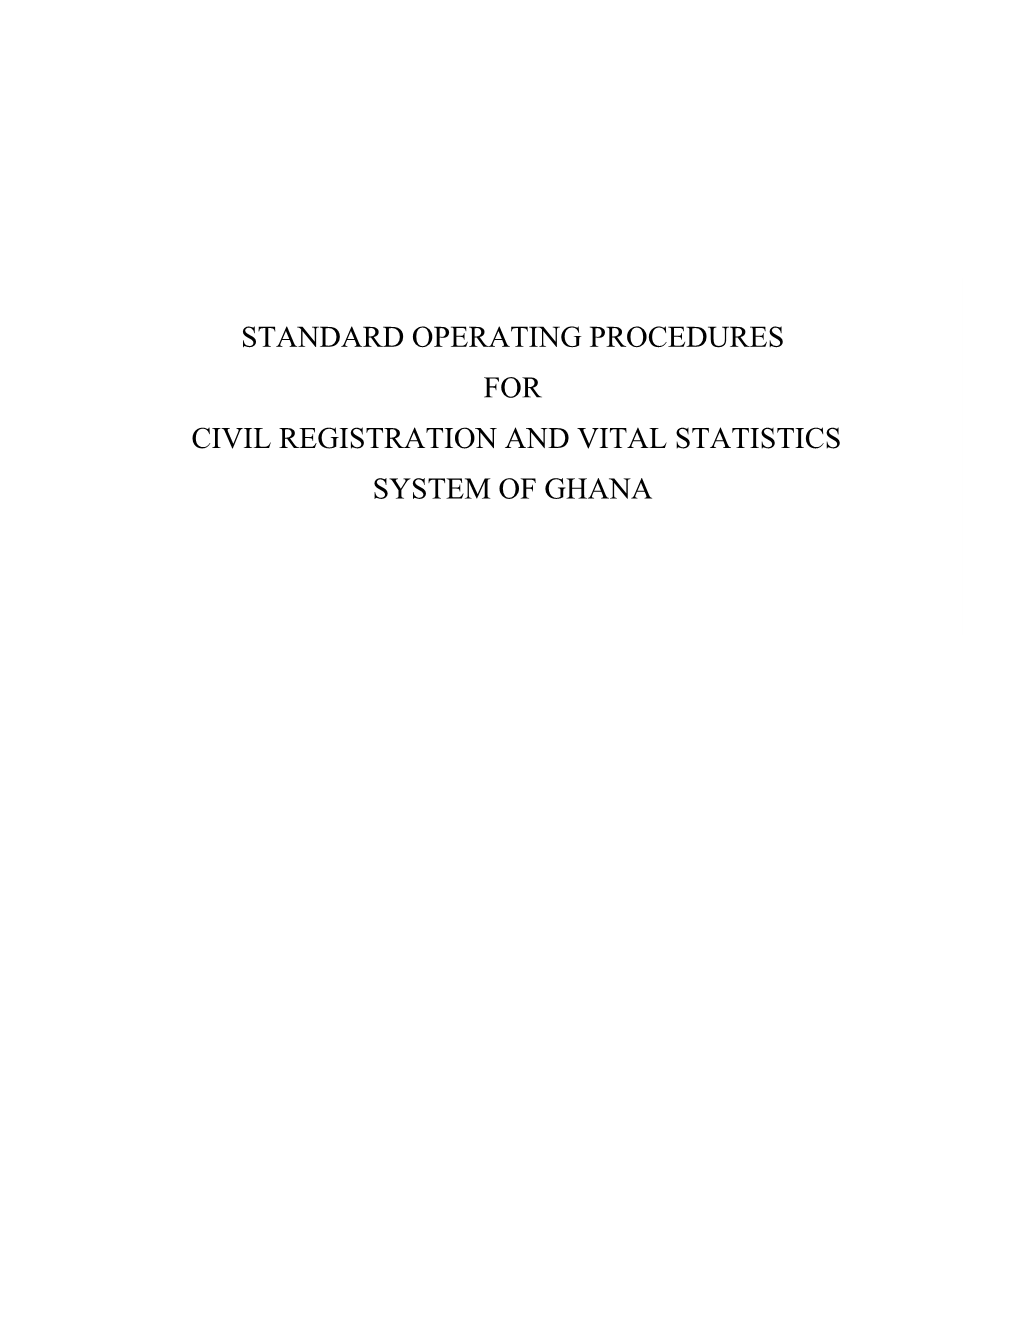 Standard Operating Procedures for Civil Registration and Vital Statistics System of Ghana